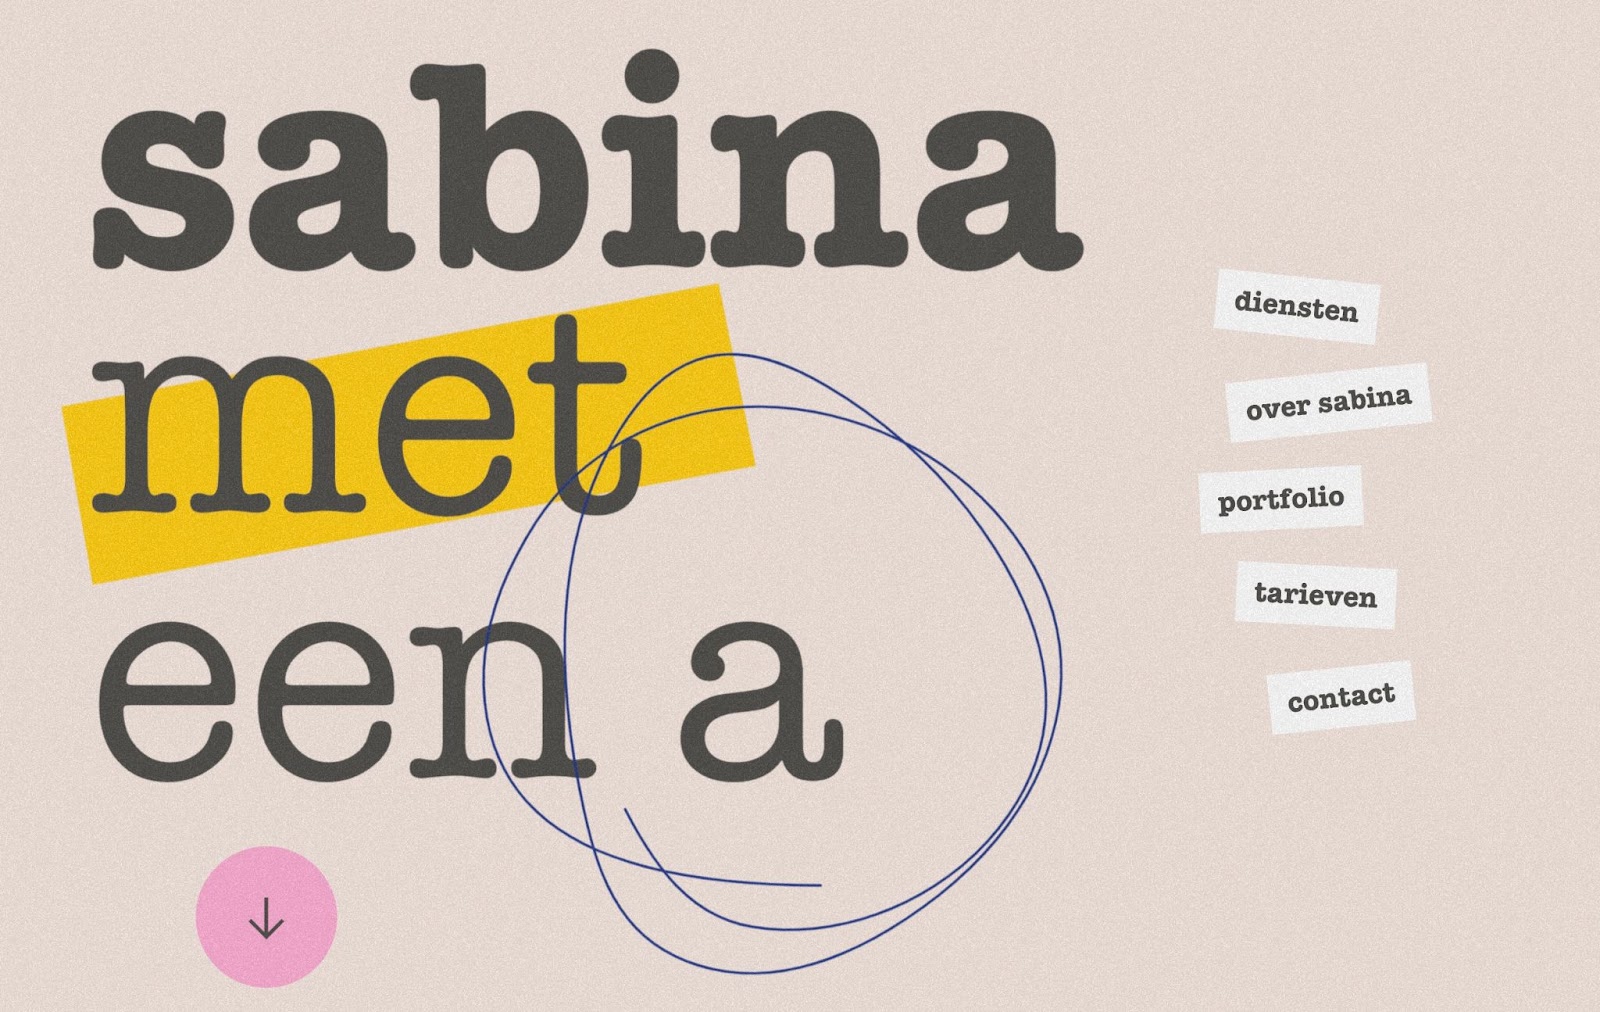 "Sabina met een a" 웹 사이트 헤더는 큰 검은색 제목 텍스트, "만남"이라는 단어를 강조 표시하는 노란색, "a" 주위에 휘갈겨 쓴 원, 아래쪽 화살표가 있는 분홍색 원이 있는 황갈색 거친 배경입니다.